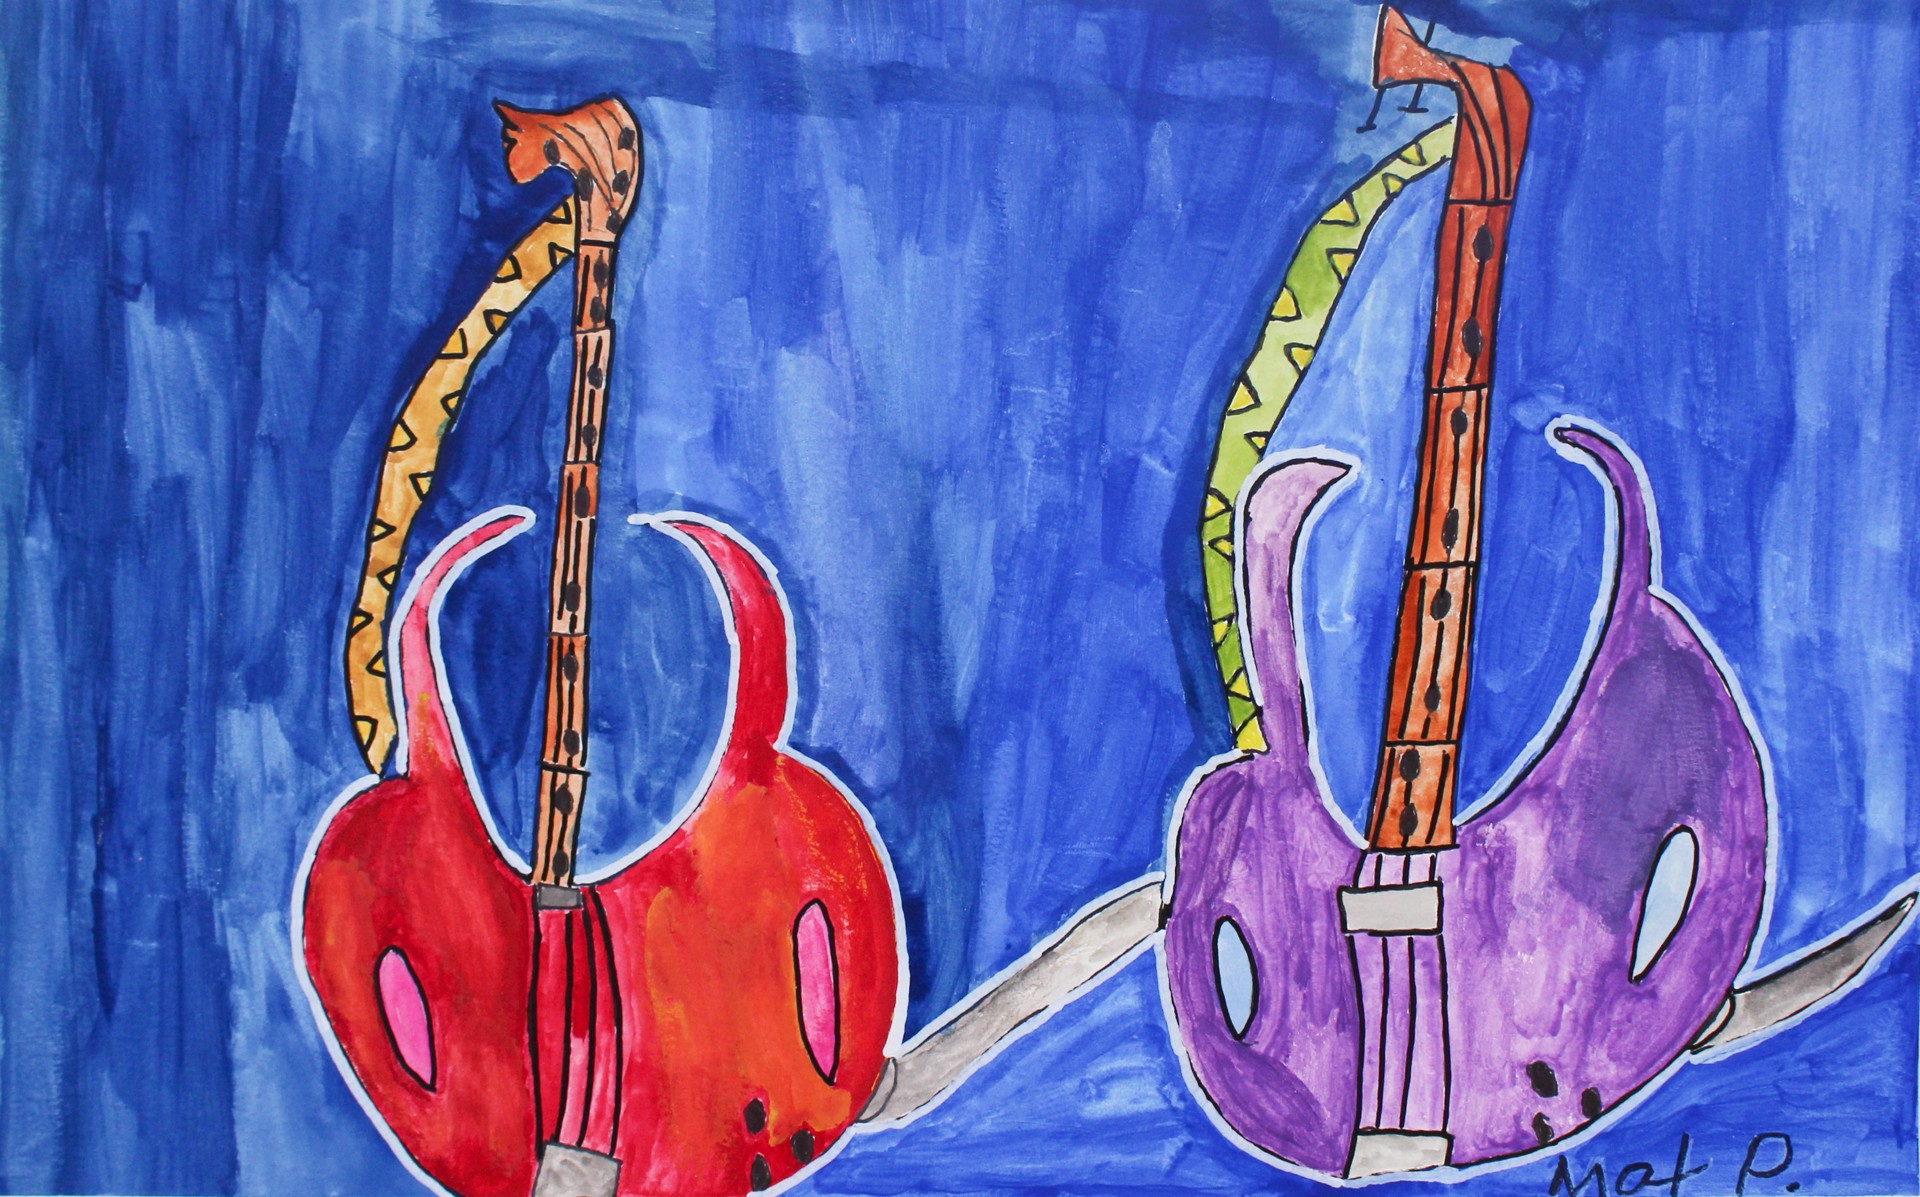 Blue Guitars by Max Poznerzon